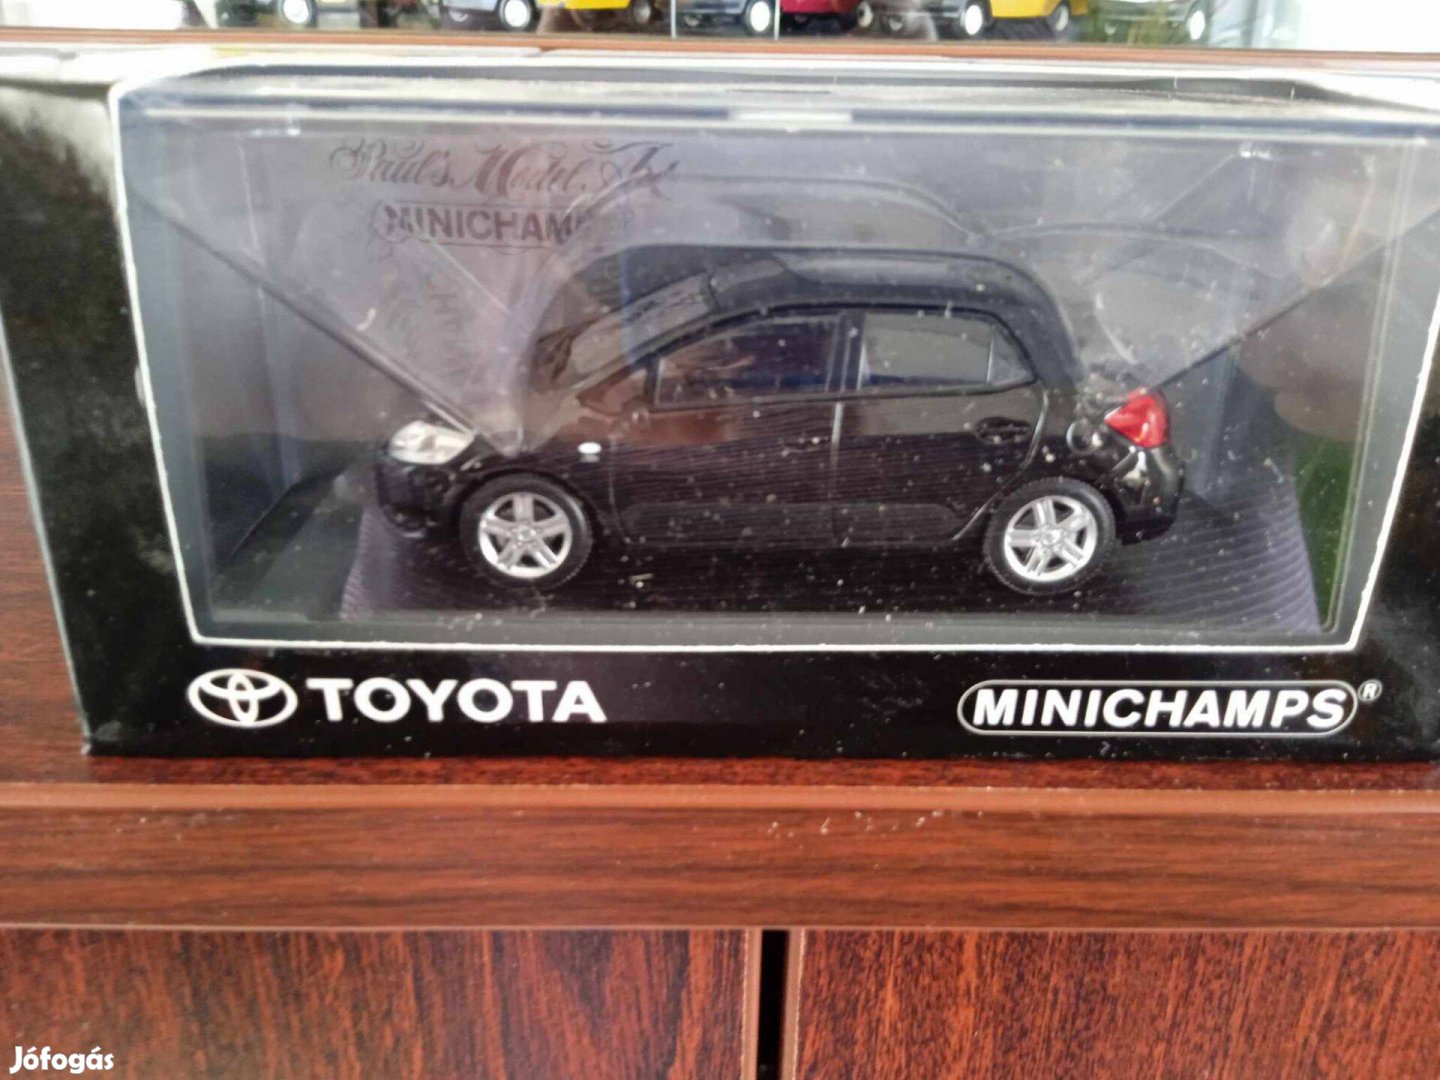 Toyota Auris Minichamps kisauto modell 1/43 Eladó